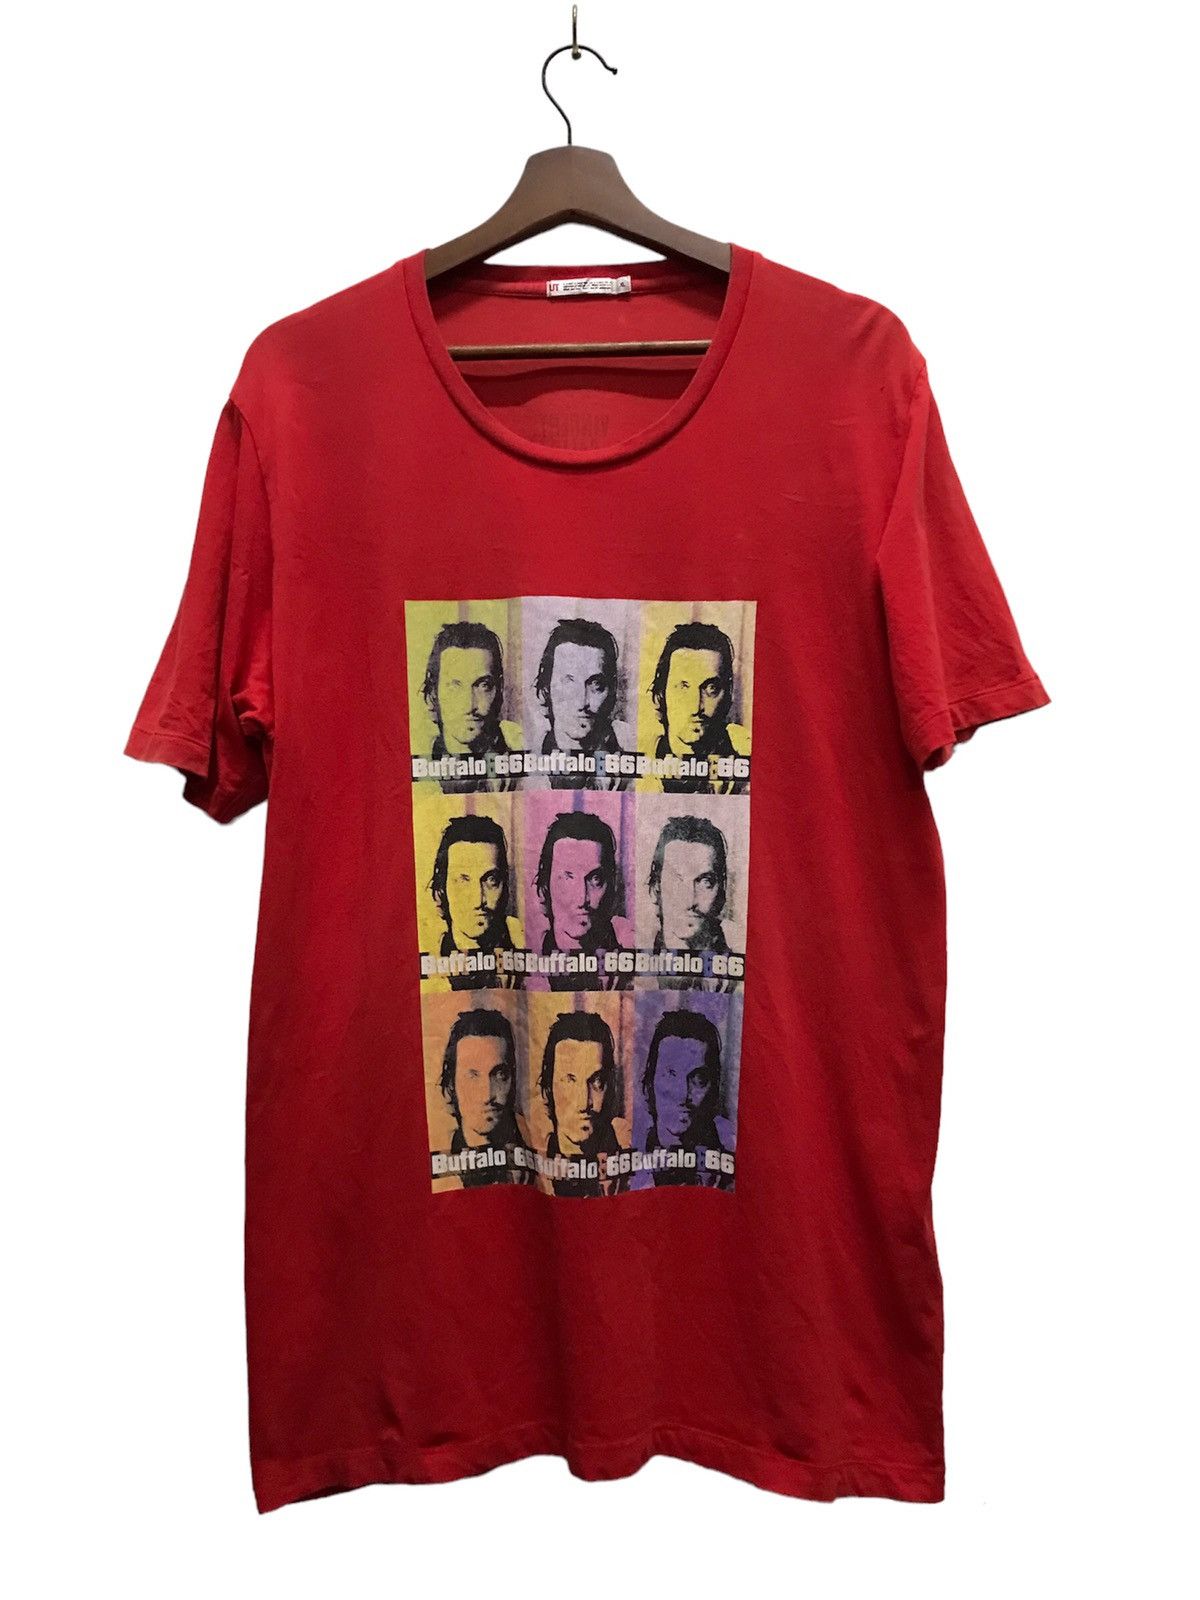 TextshirtDesign Buffalo 66 T-Shirt for Women and Men/ Film, Vincent Gallo, Christina Ricci, Unique, Handmade, Cotton, High Quality T-Shirt